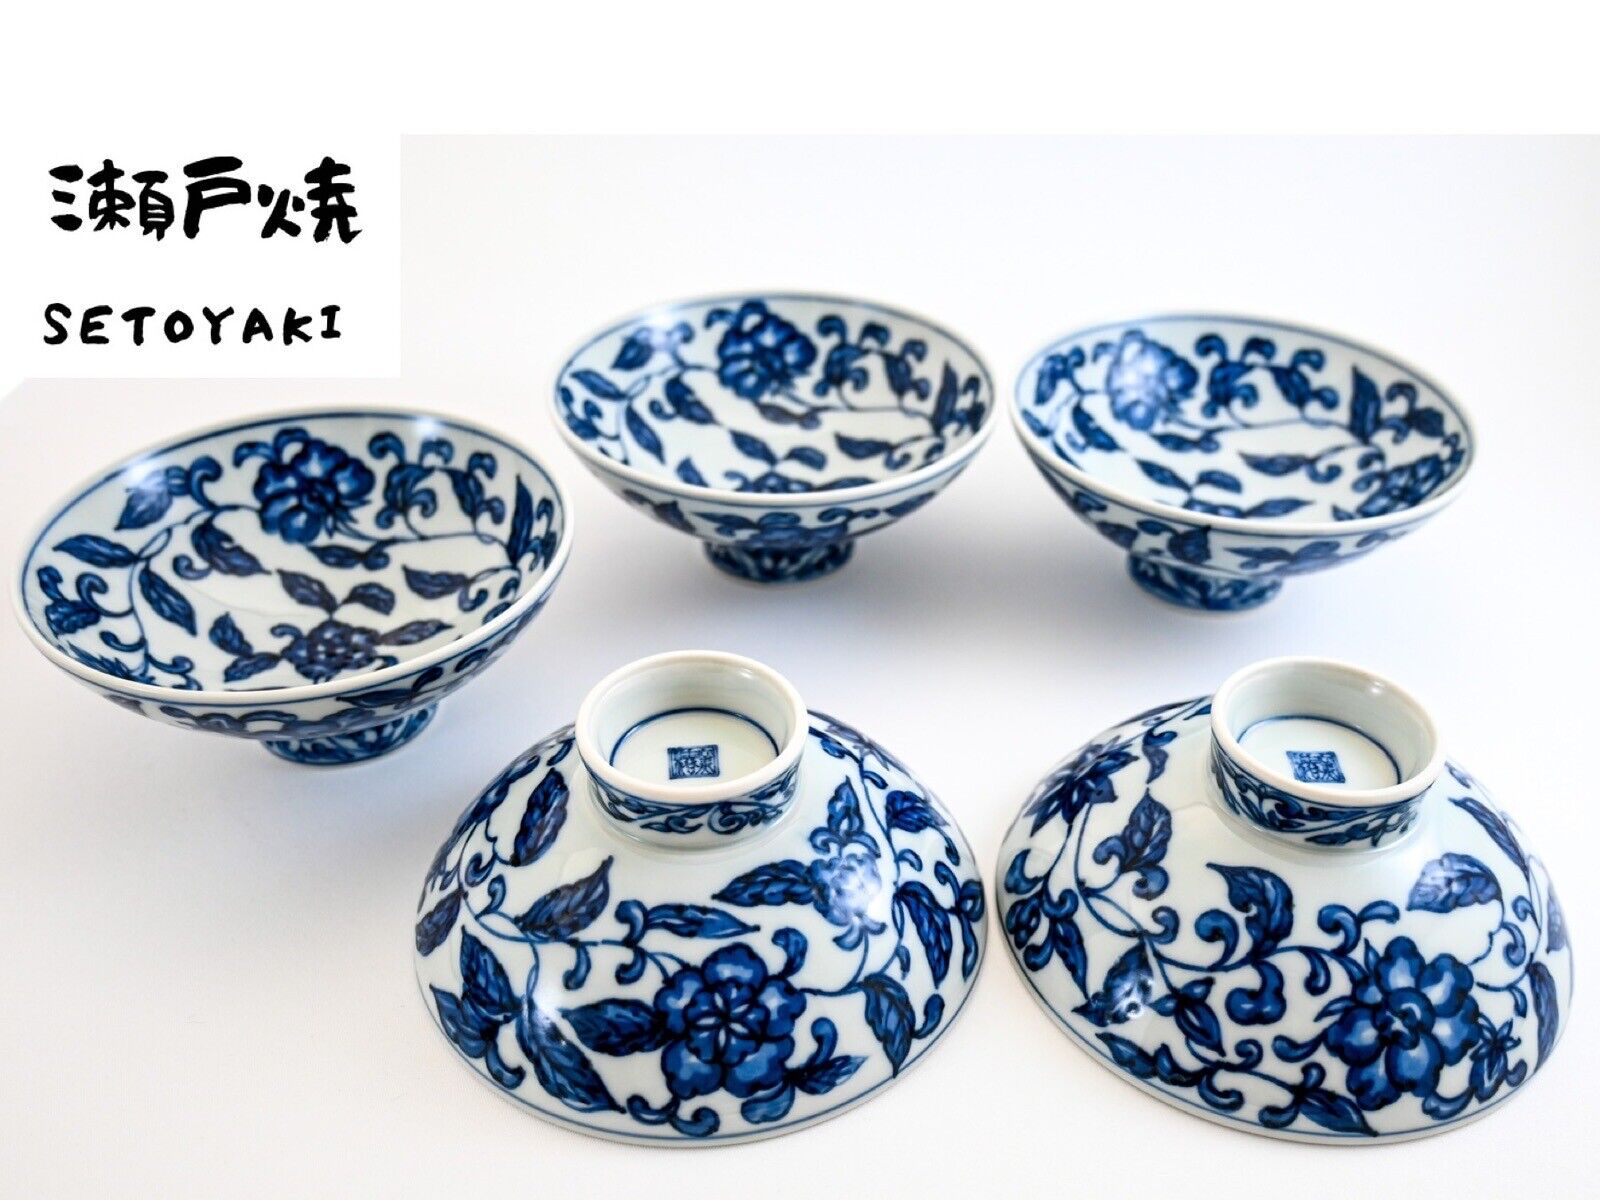 Vintage Set of 5 Japanese Ceramics Soup Rice Bowl Blue & White Floral Seto Ware